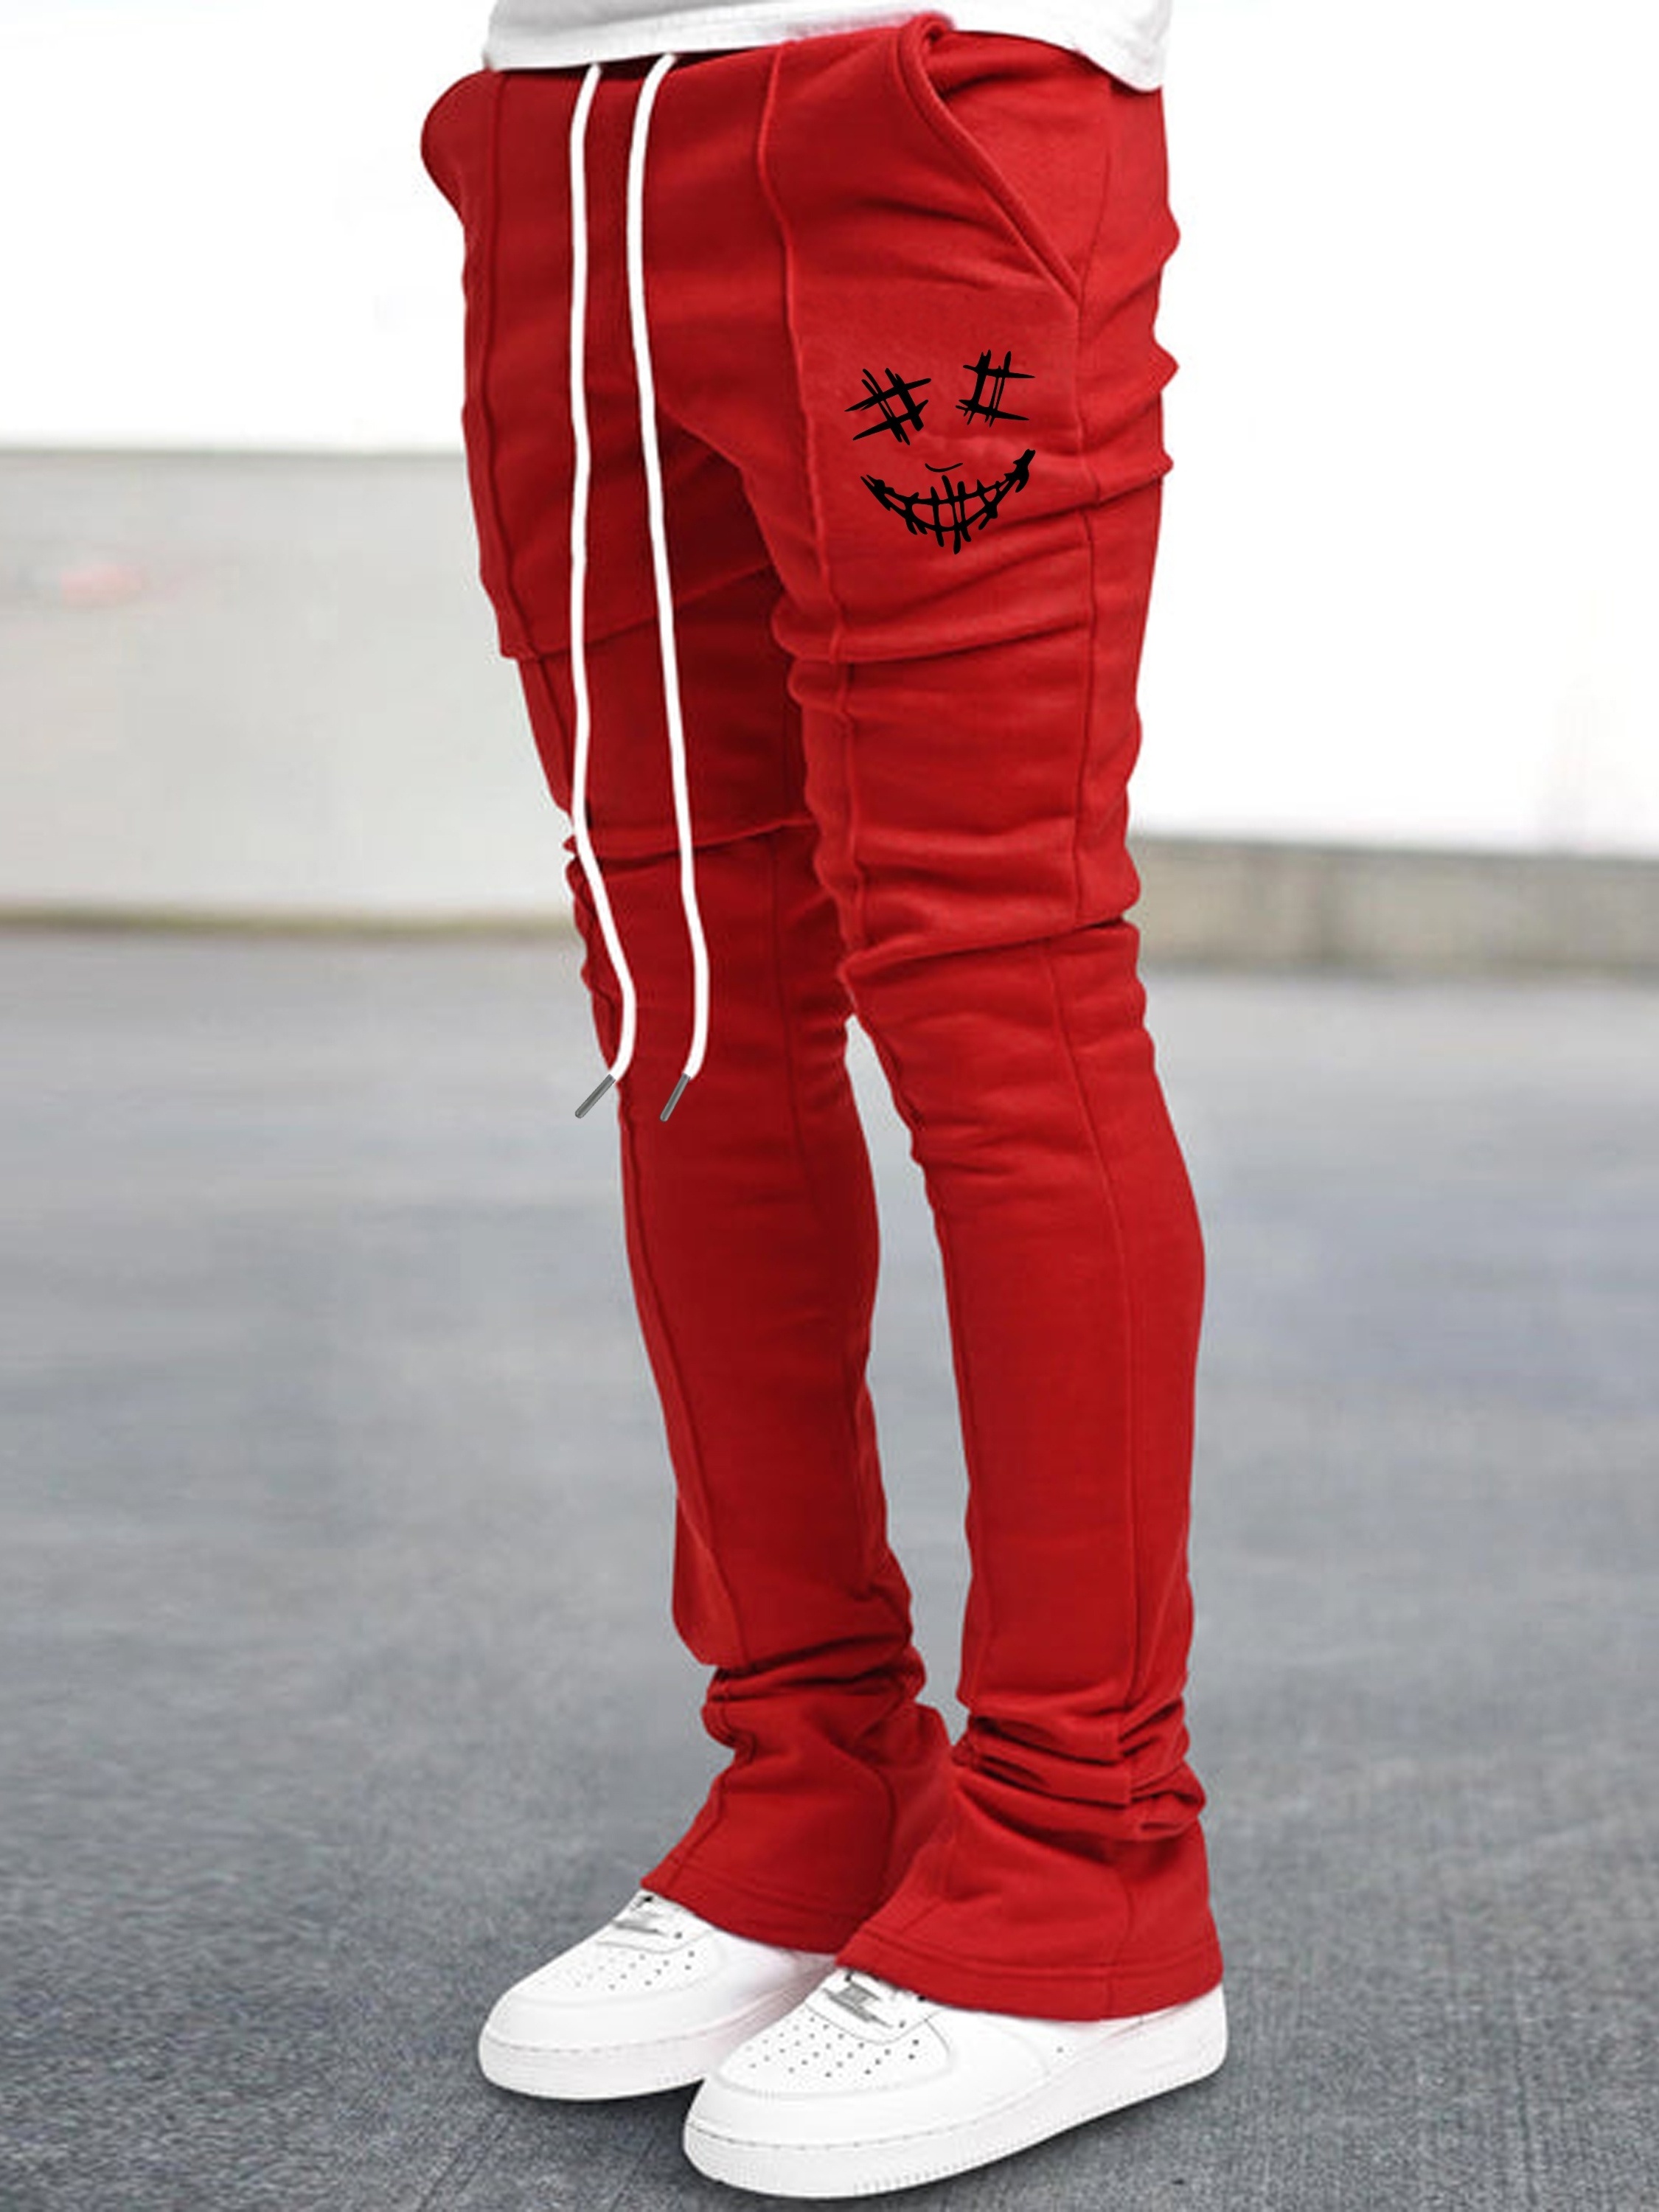 Contrast Bootcut Sweatpants - Red  Bootcut, Denim flares, Sweatpants